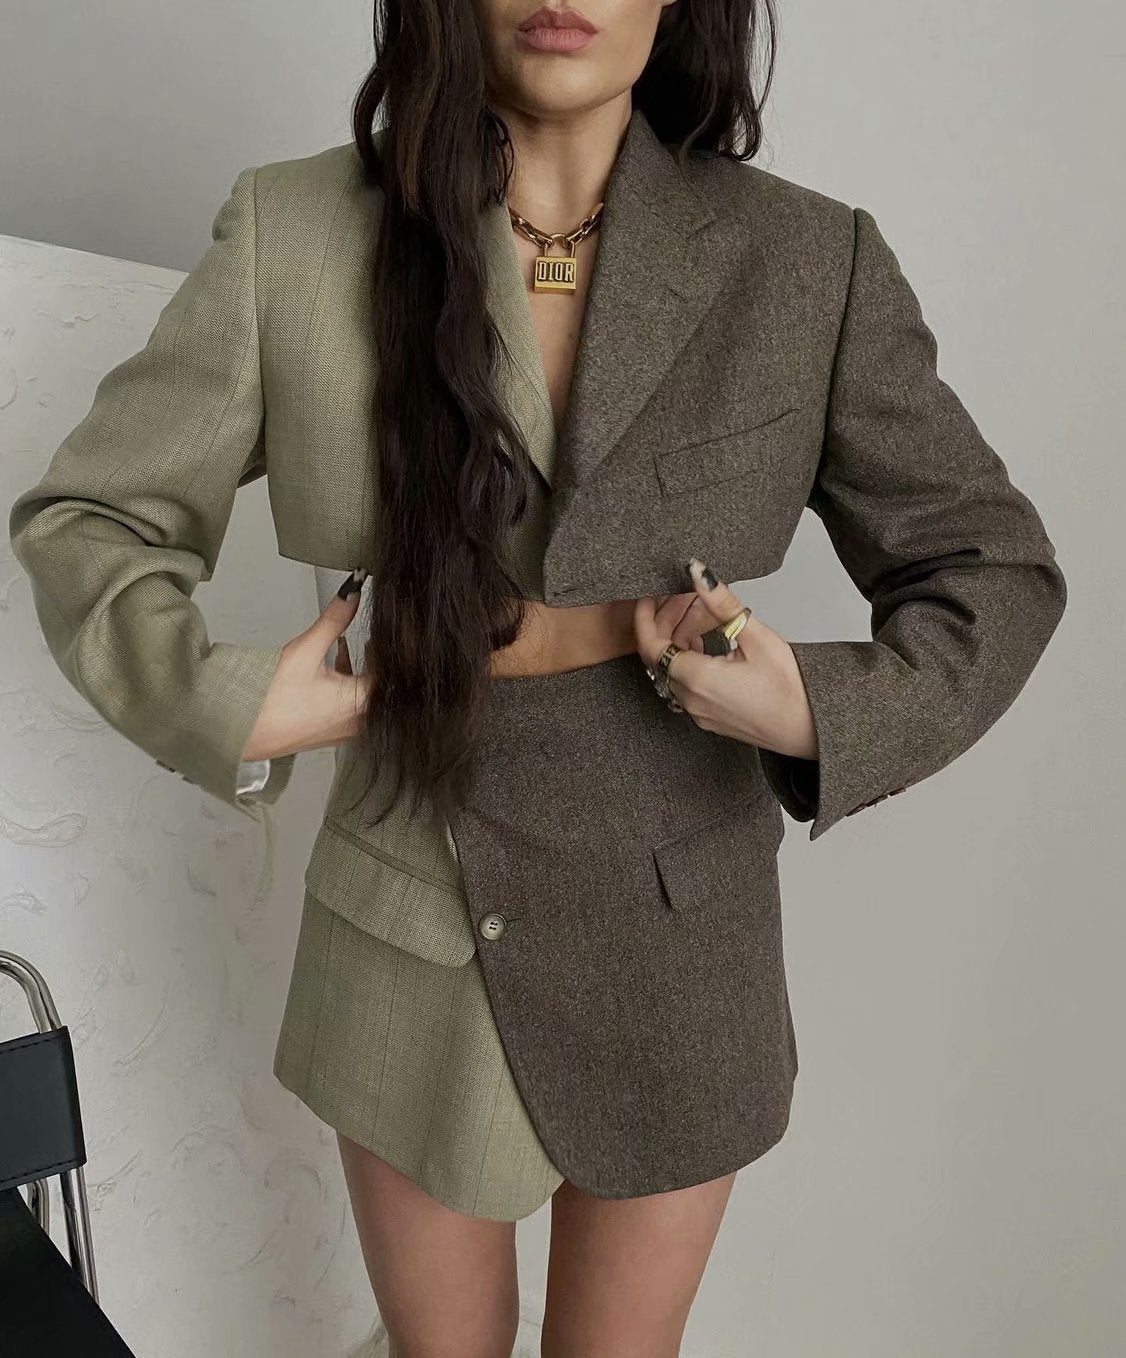 OOTDGIRL Fashion Women Vintage Patchwork Crop Blazer Mujer Notched Collar Single Button Suit Outerwear Autumn Chic Tops